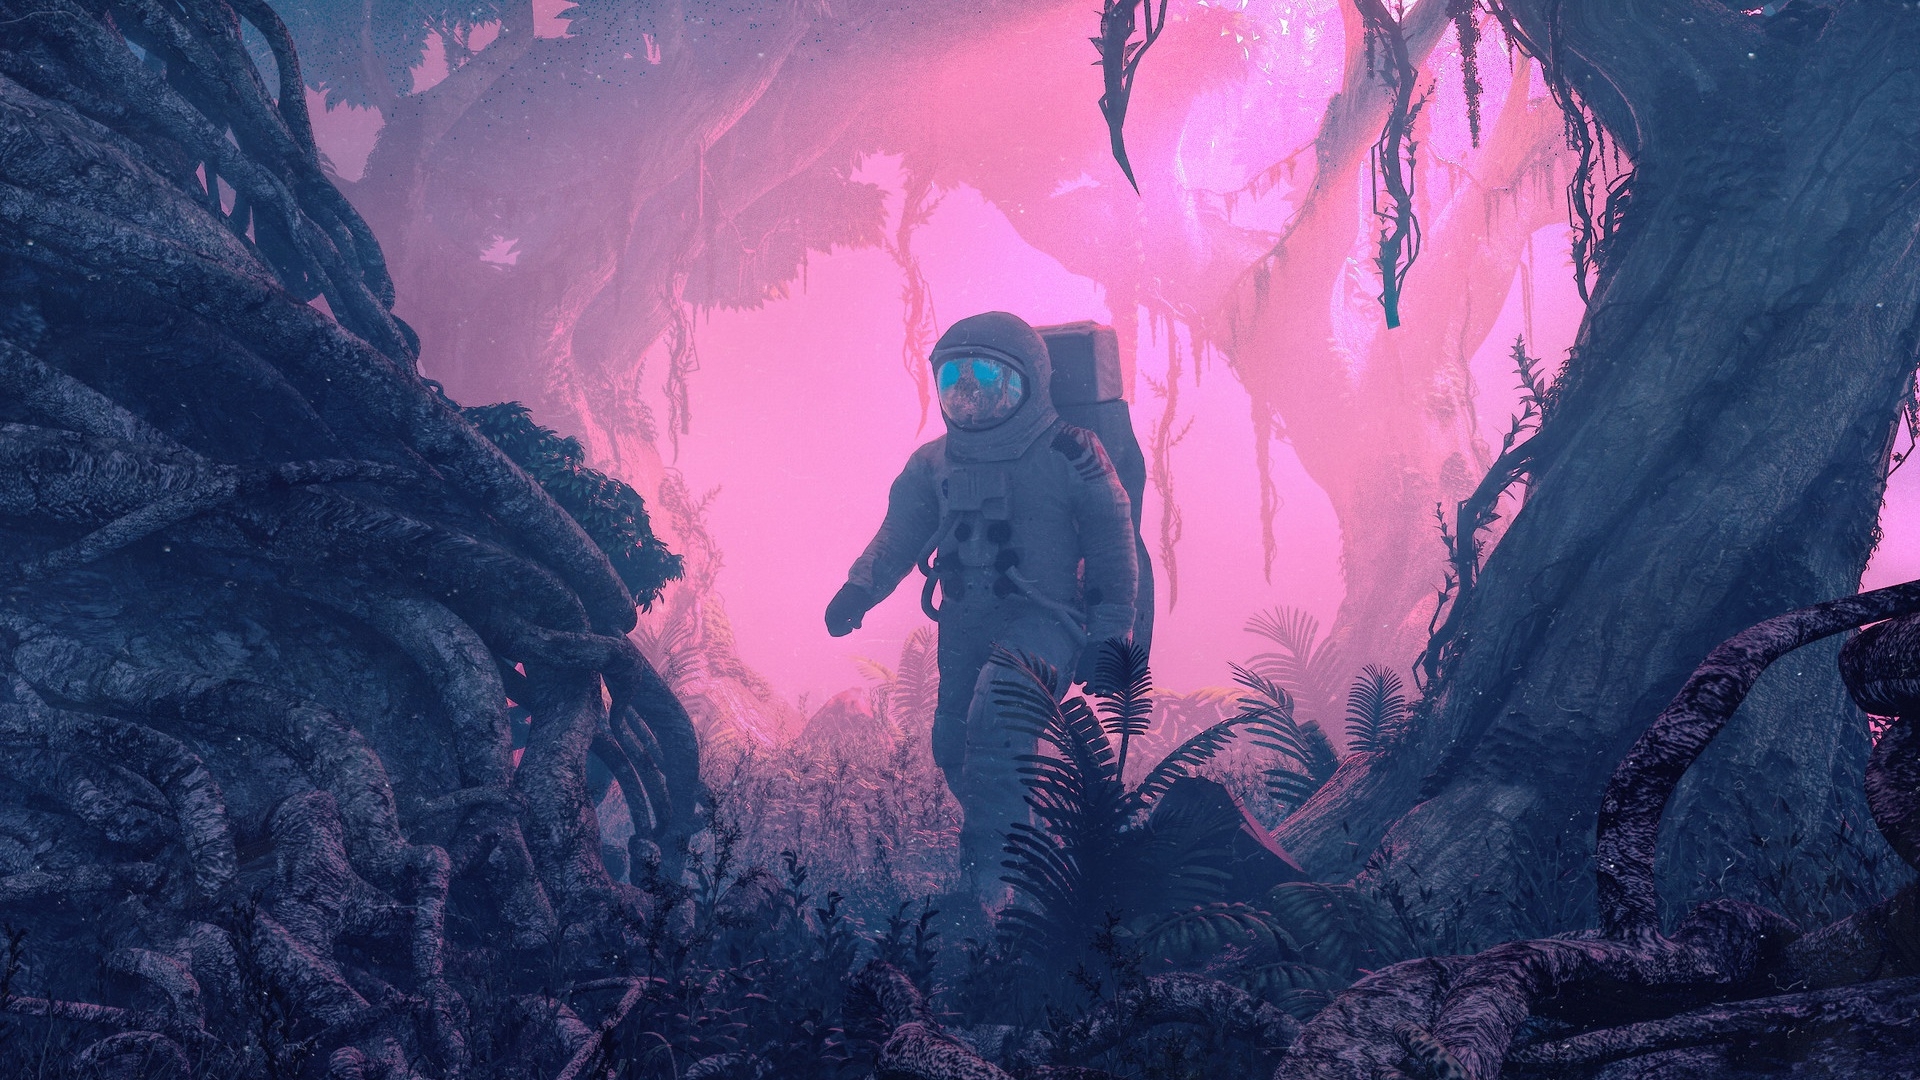 General 1920x1080 astronaut aliens planet forest exploration walking digital art